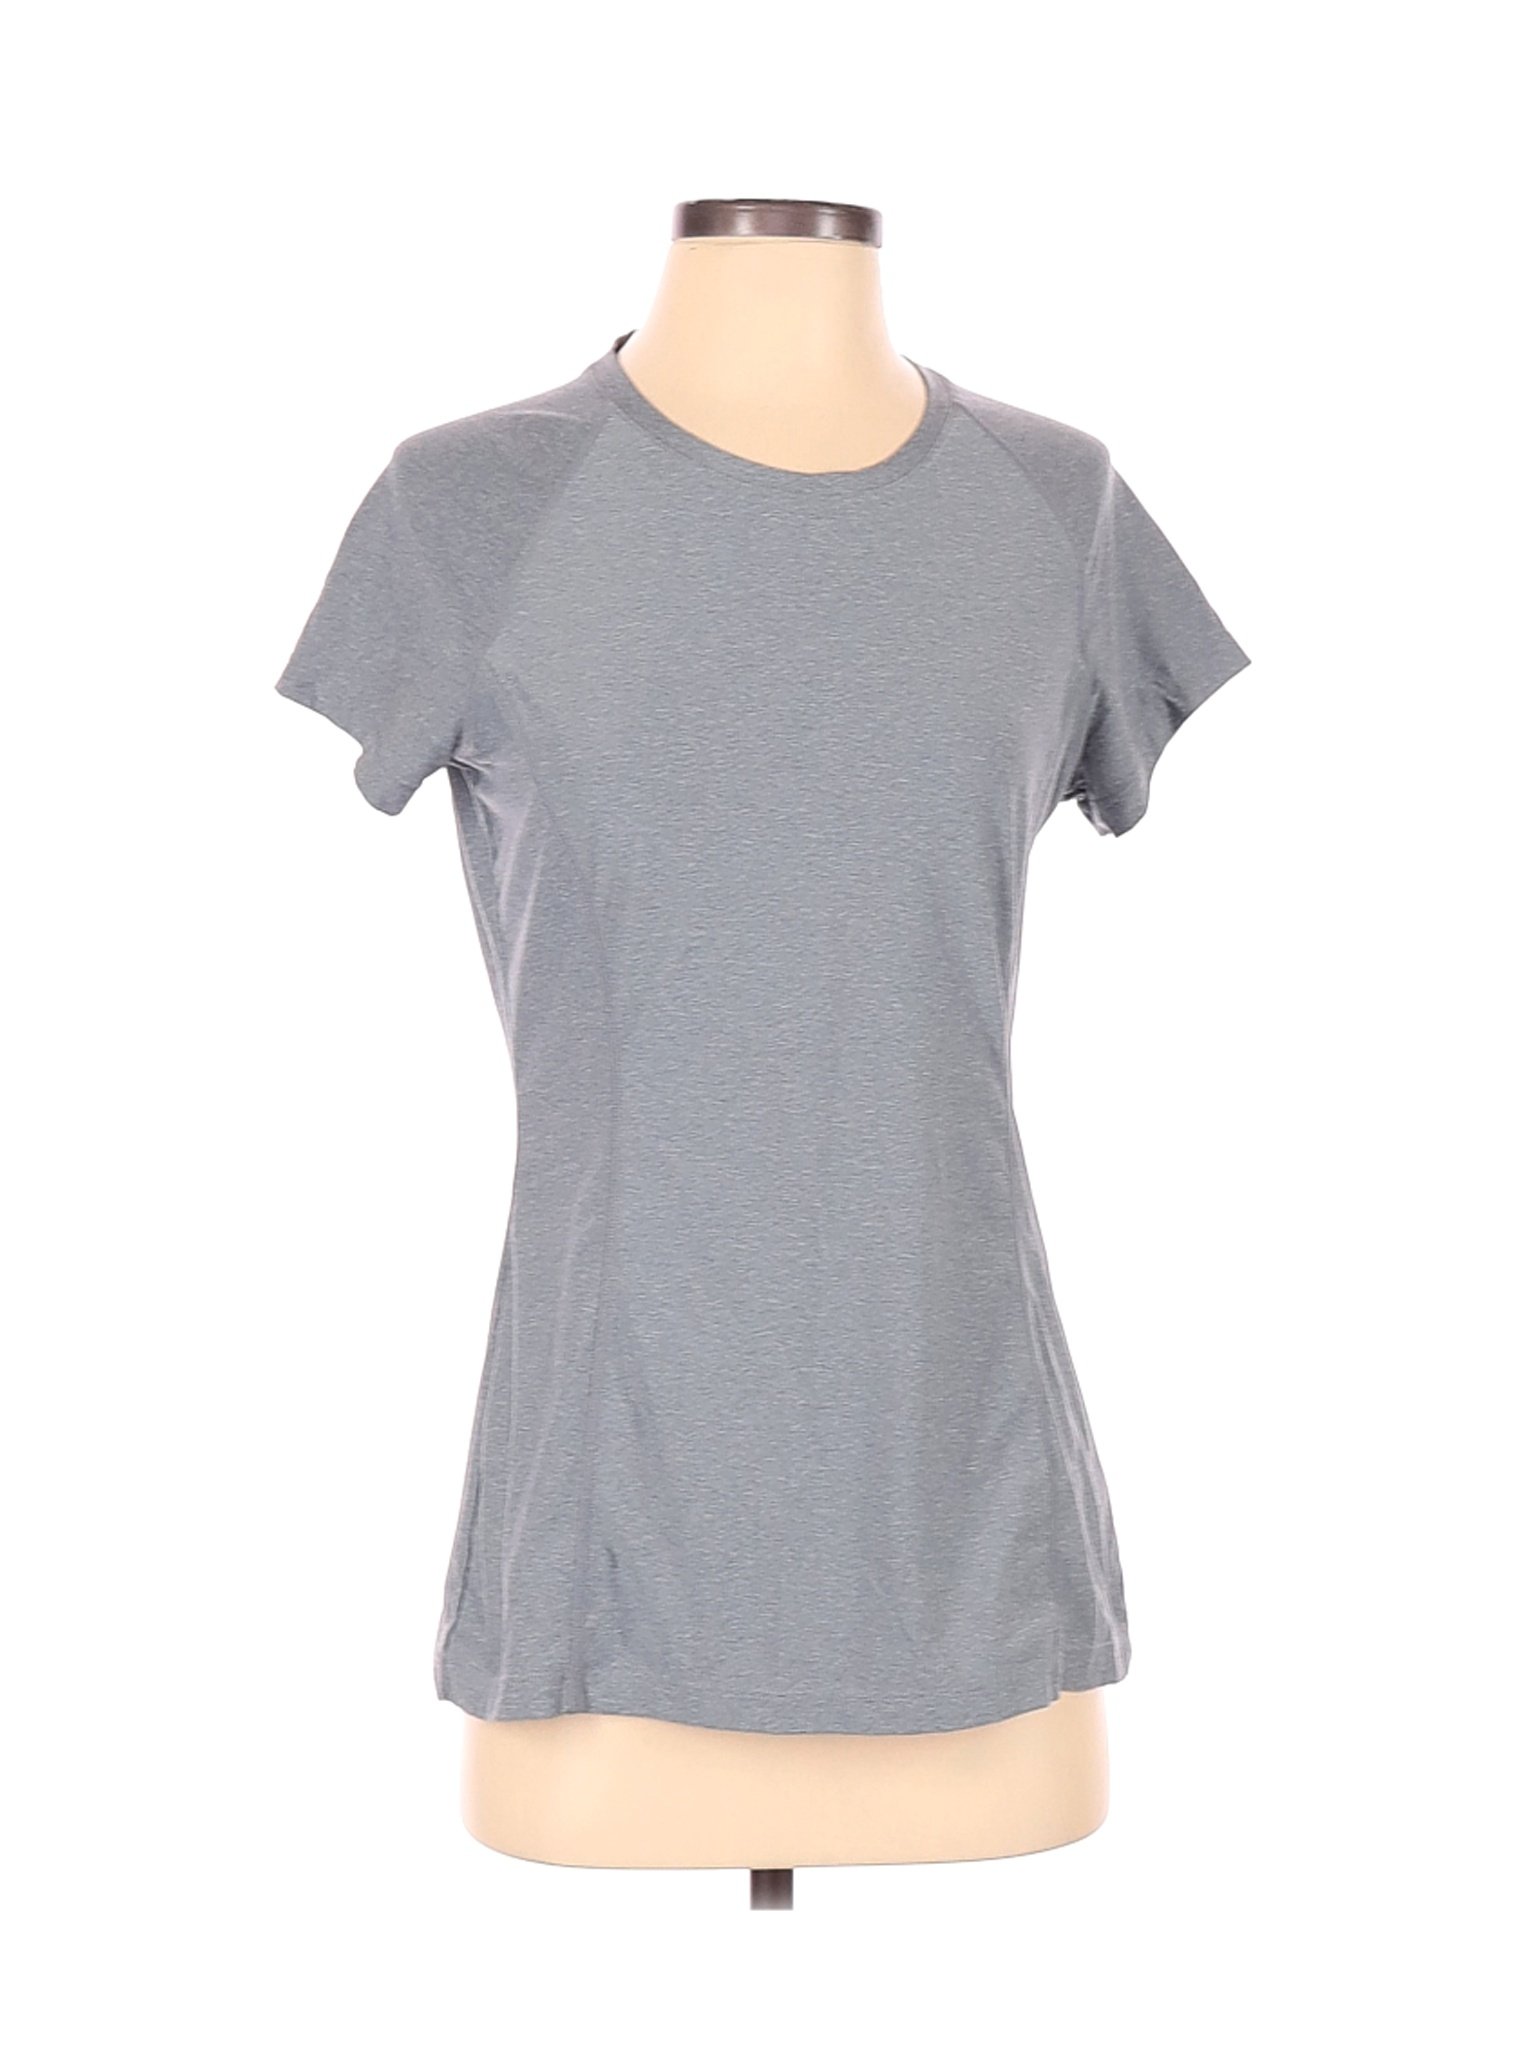 Mondetta Women Gray Active T-Shirt M | eBay